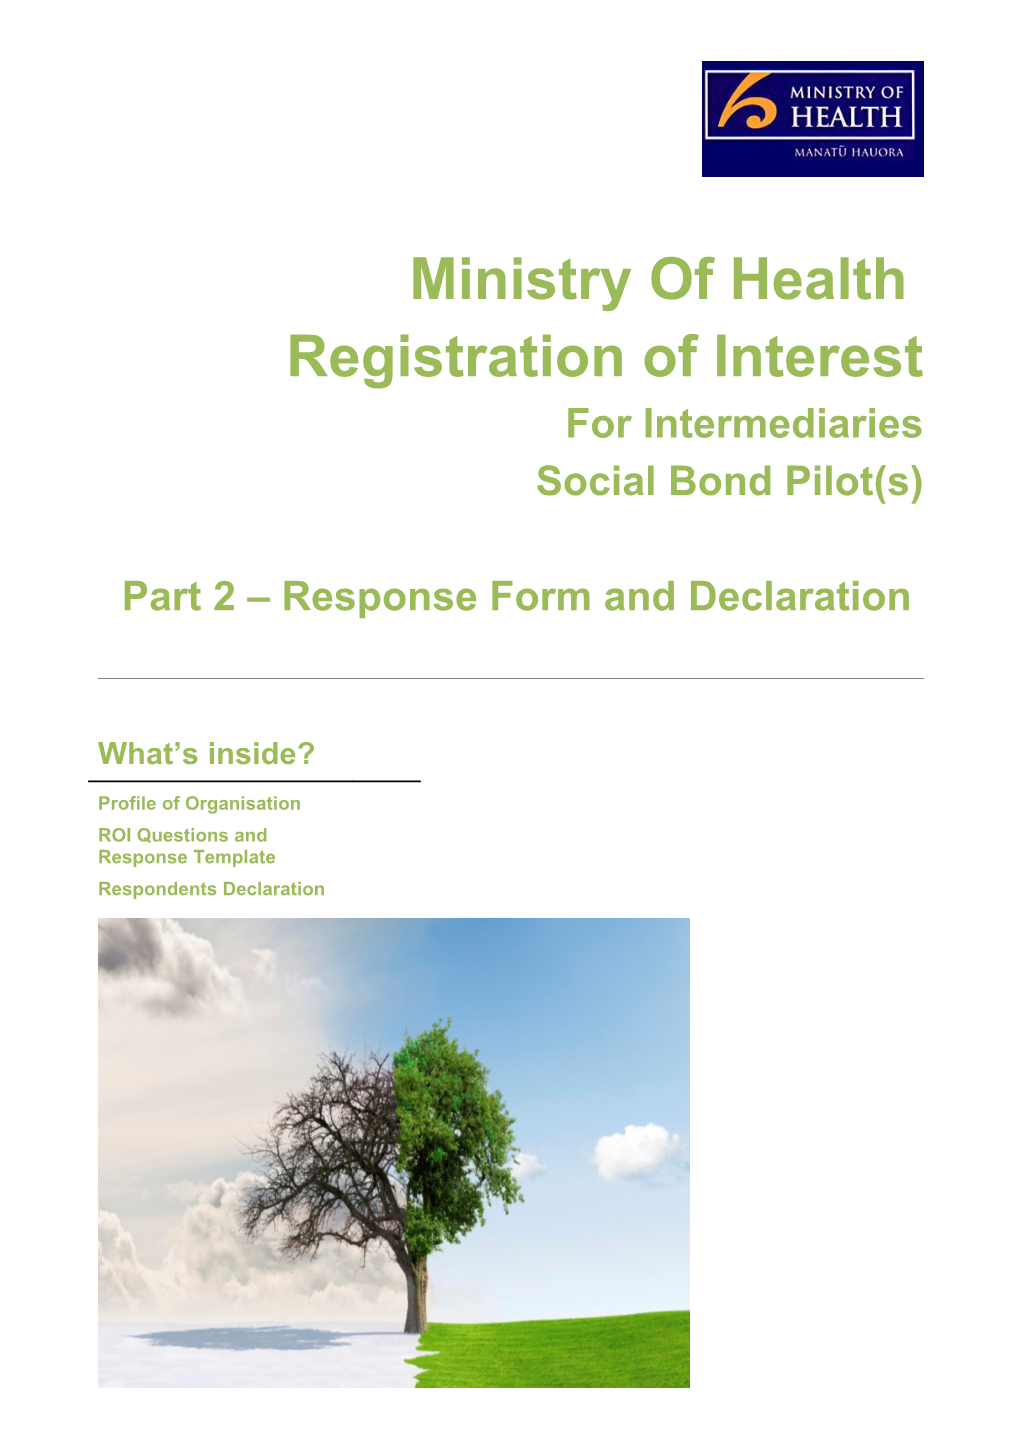 Ministry of Health Registration of Interest for Intermediaries Social Bond Pilot(S): Part